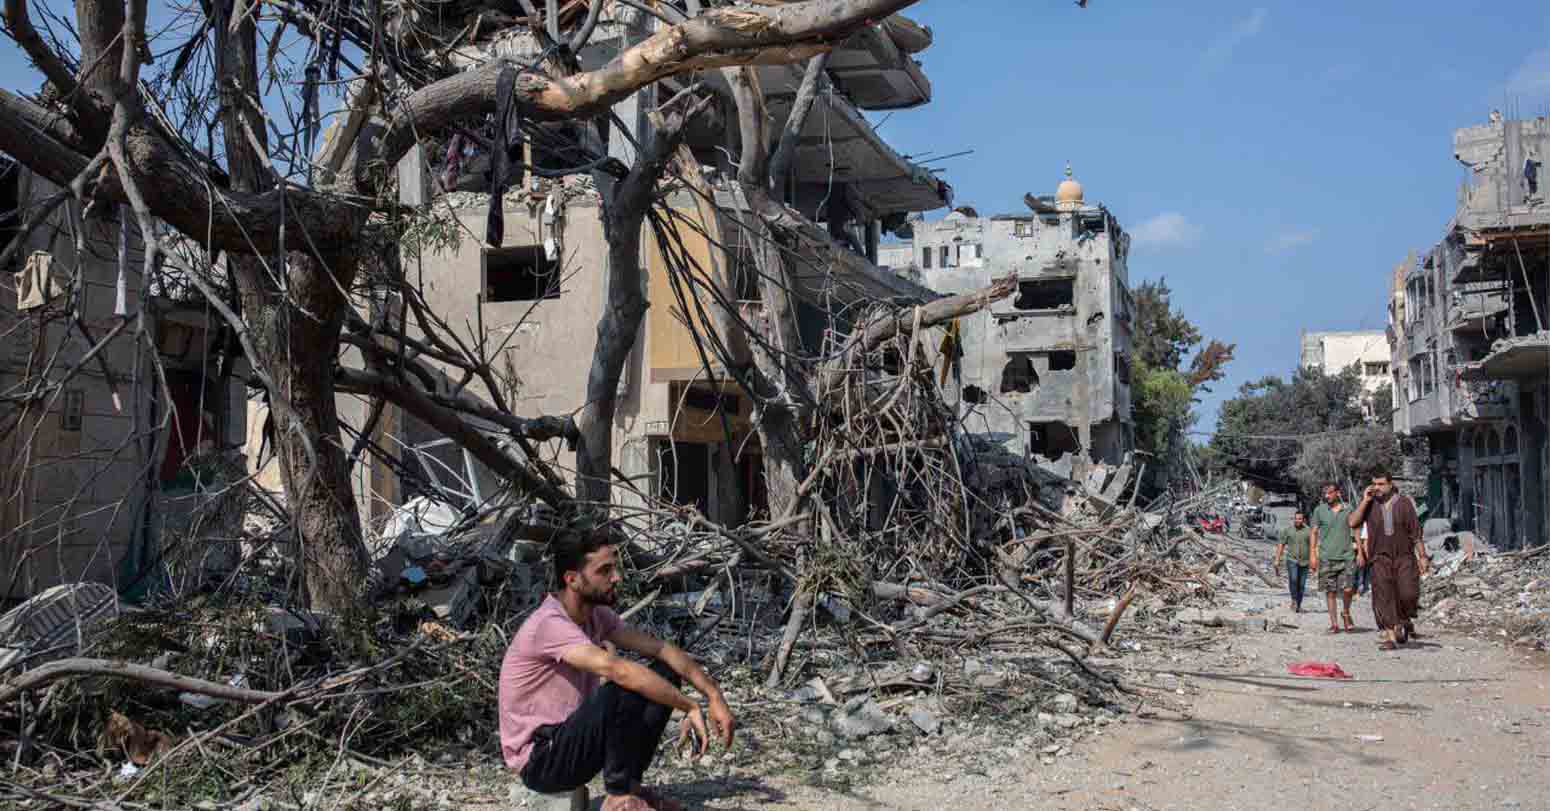 “Enough Is Enough”: UN Agency Chiefs Call For Immediate Gaza Ceasefire